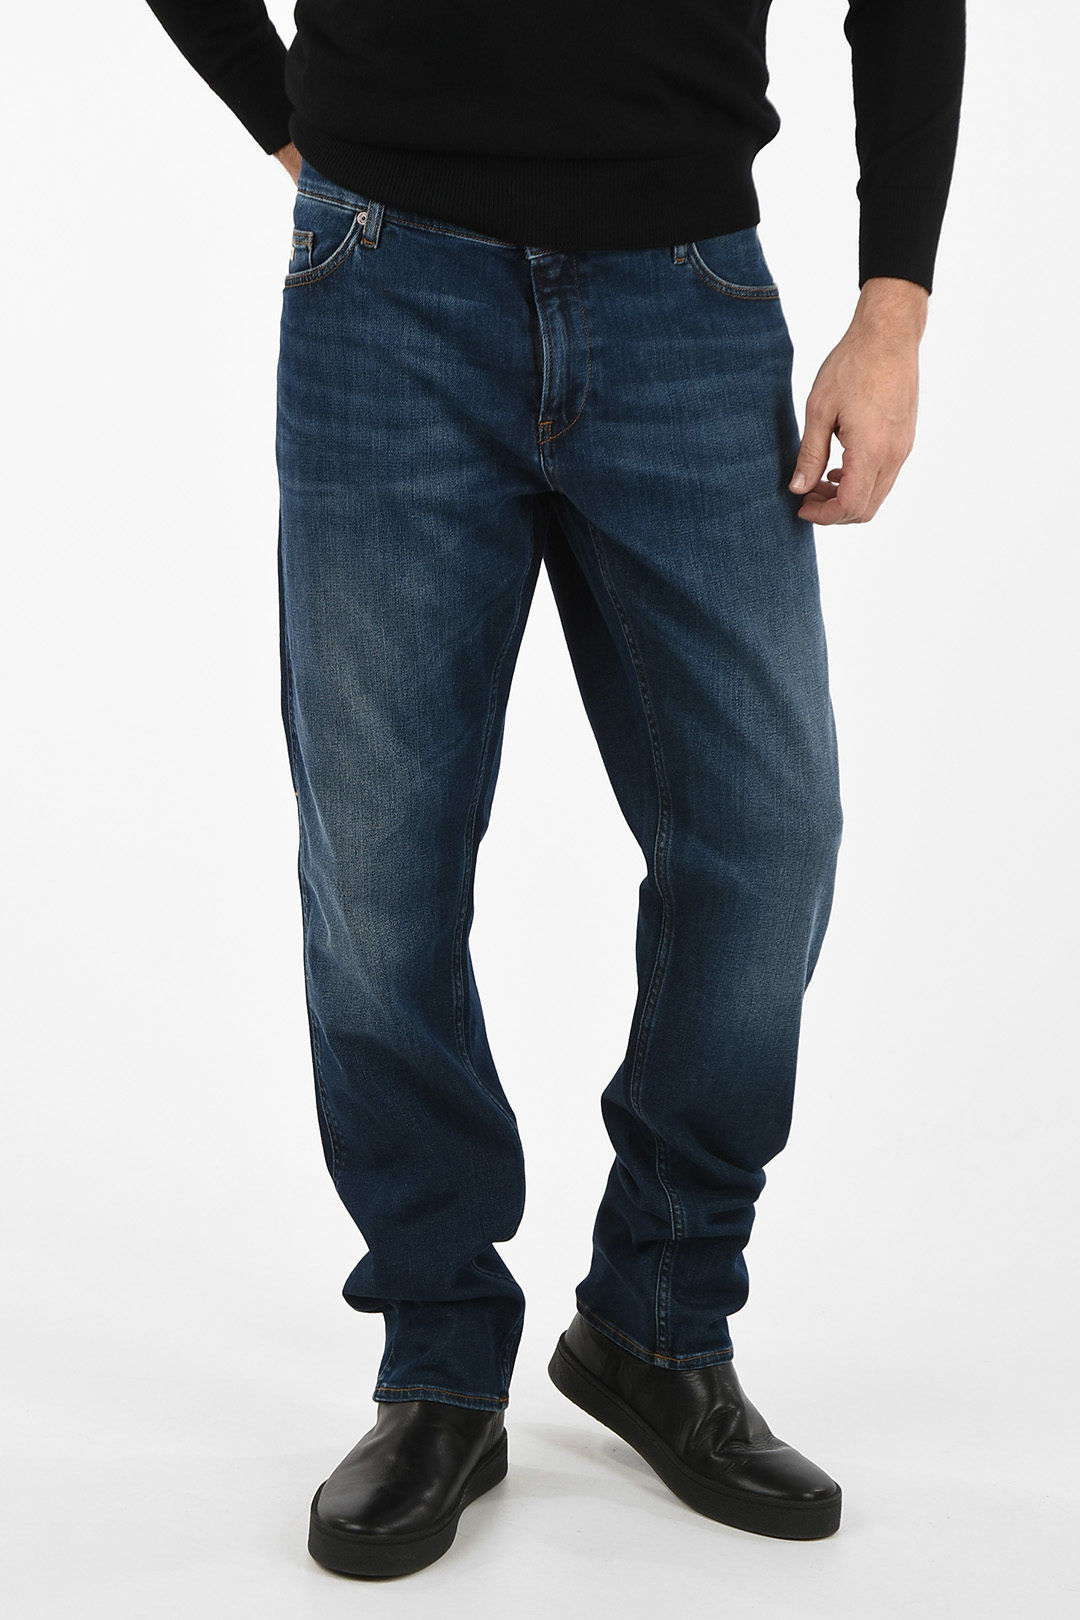 Verslijten De waarheid vertellen barricade Boss Mid-rise DELAWARE slim fit jeans 21cm men - Glamood Outlet